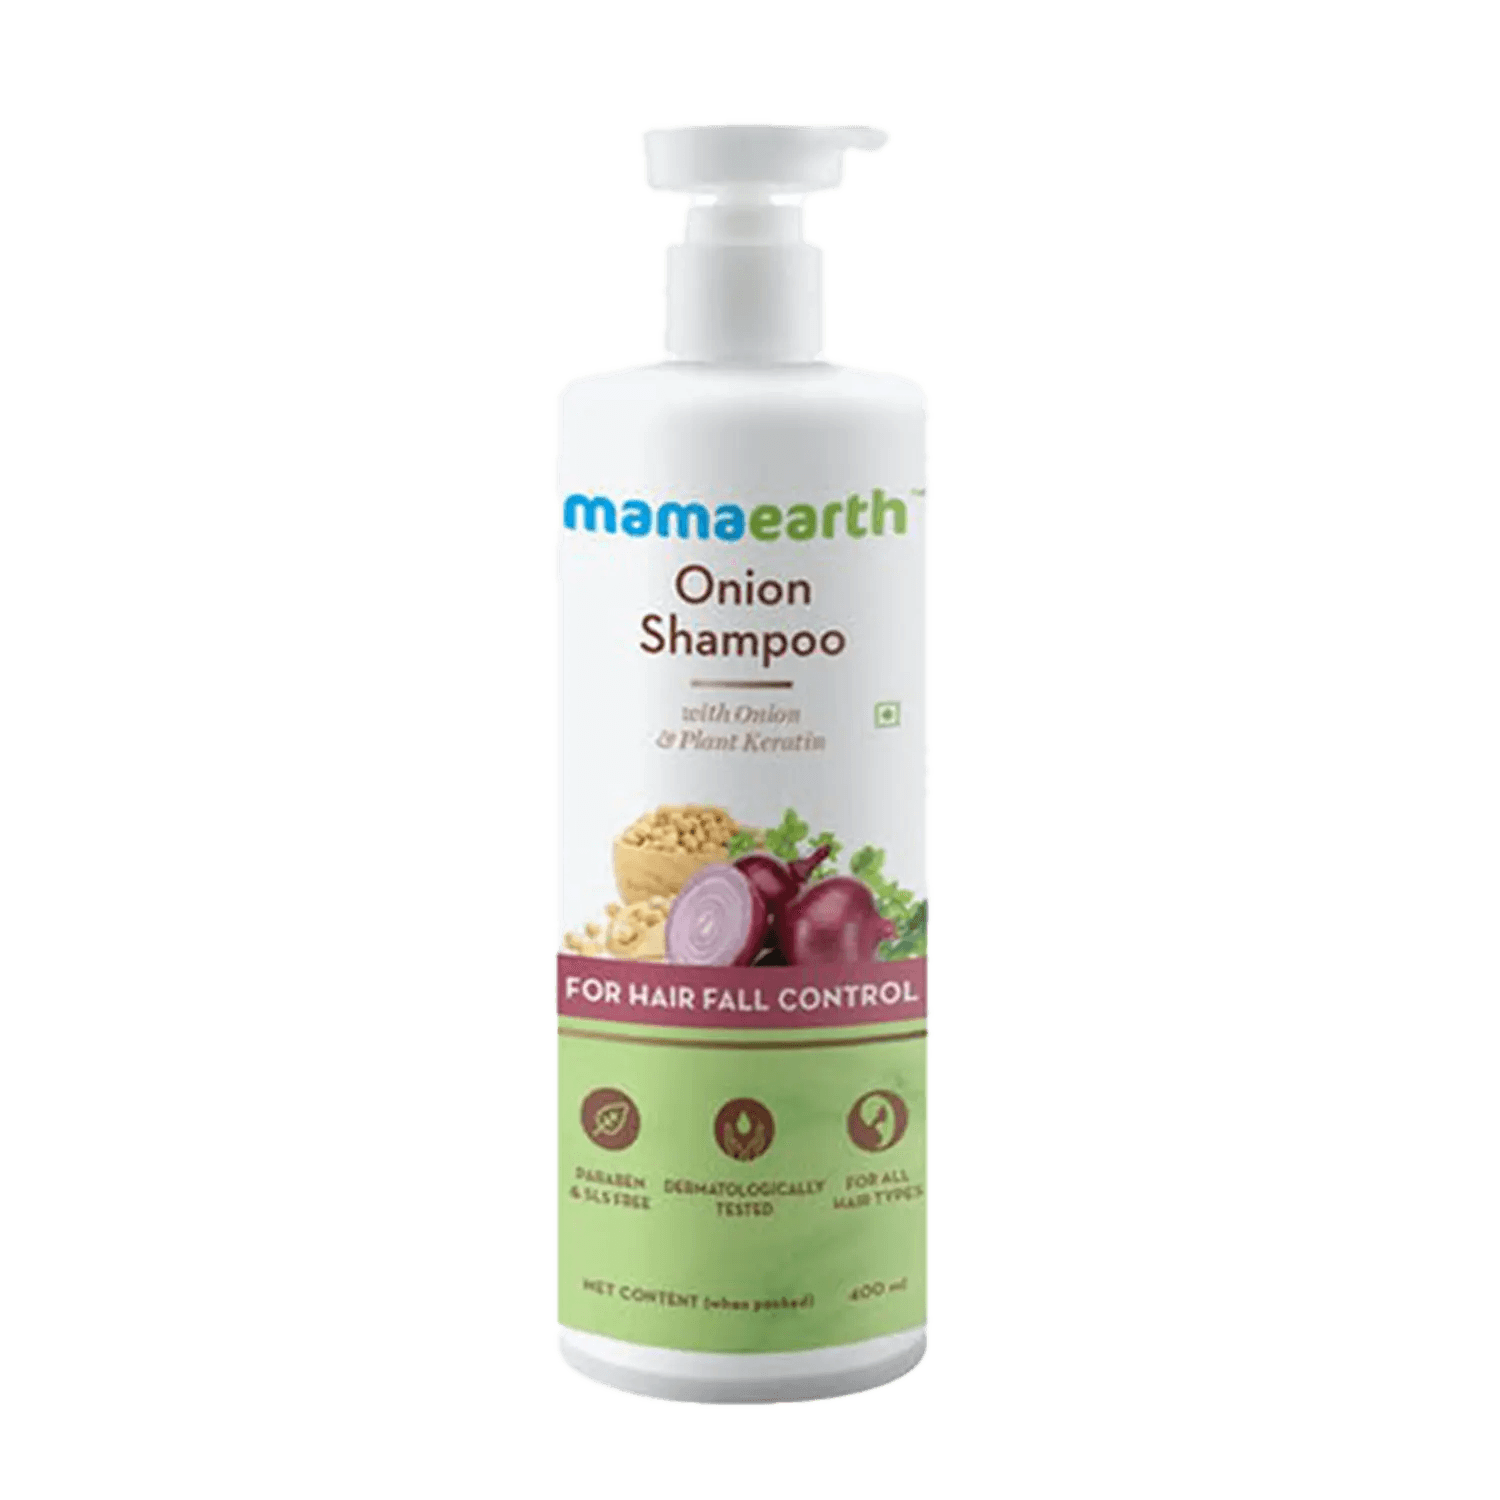 Mamaearth | Mamaearth Onion Shampoo with Onion & Plant Keratin For Hair Fall Control (400ml)